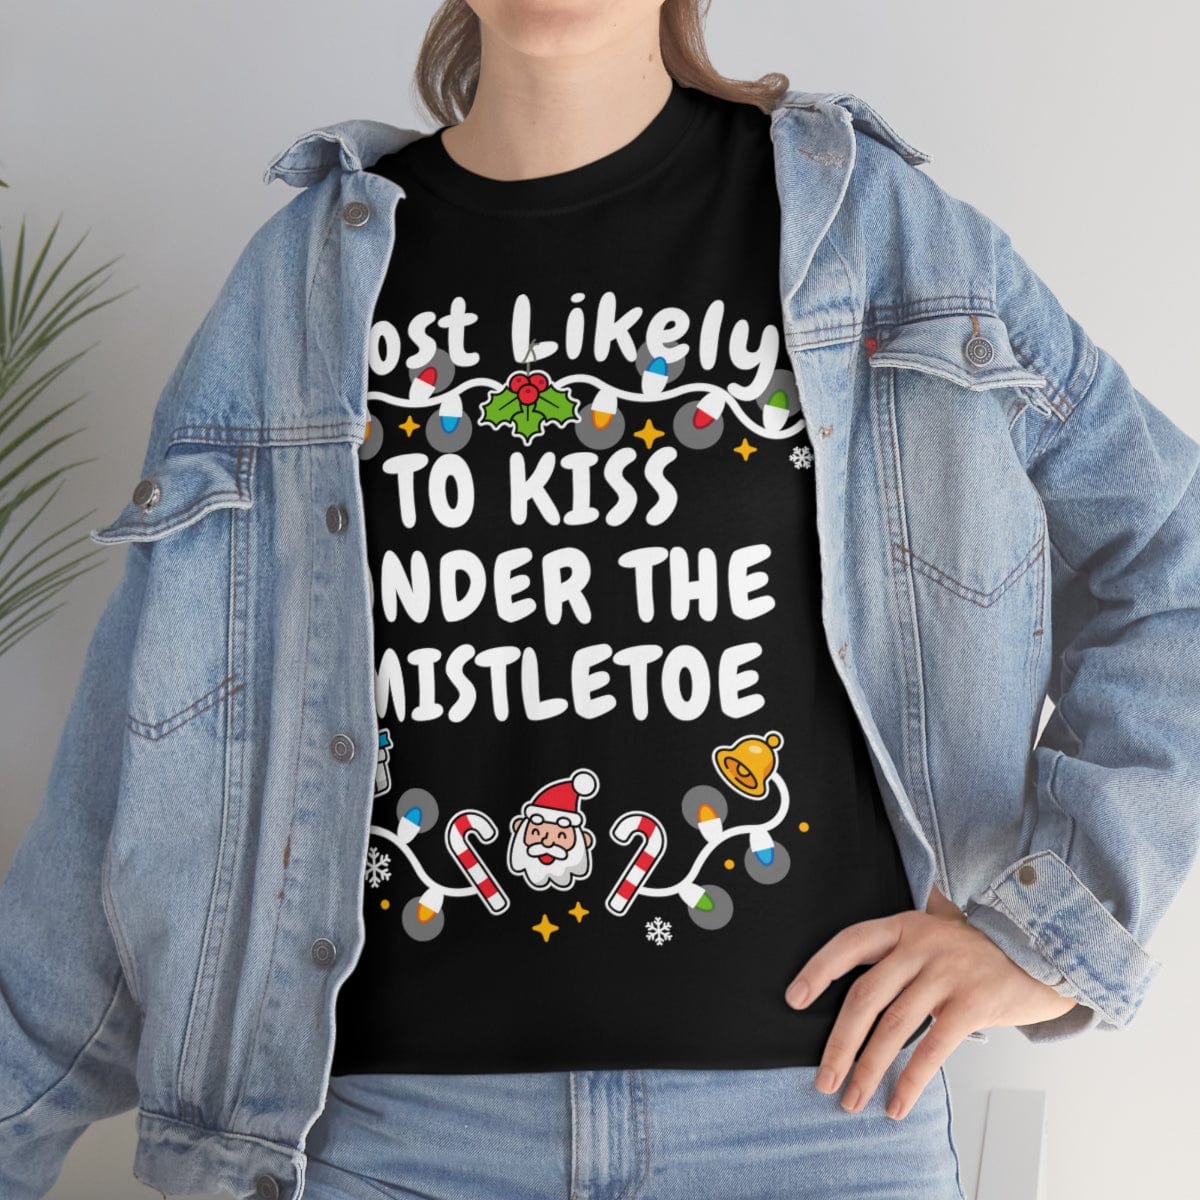 TO KISS UNDER THE MISTLETOE